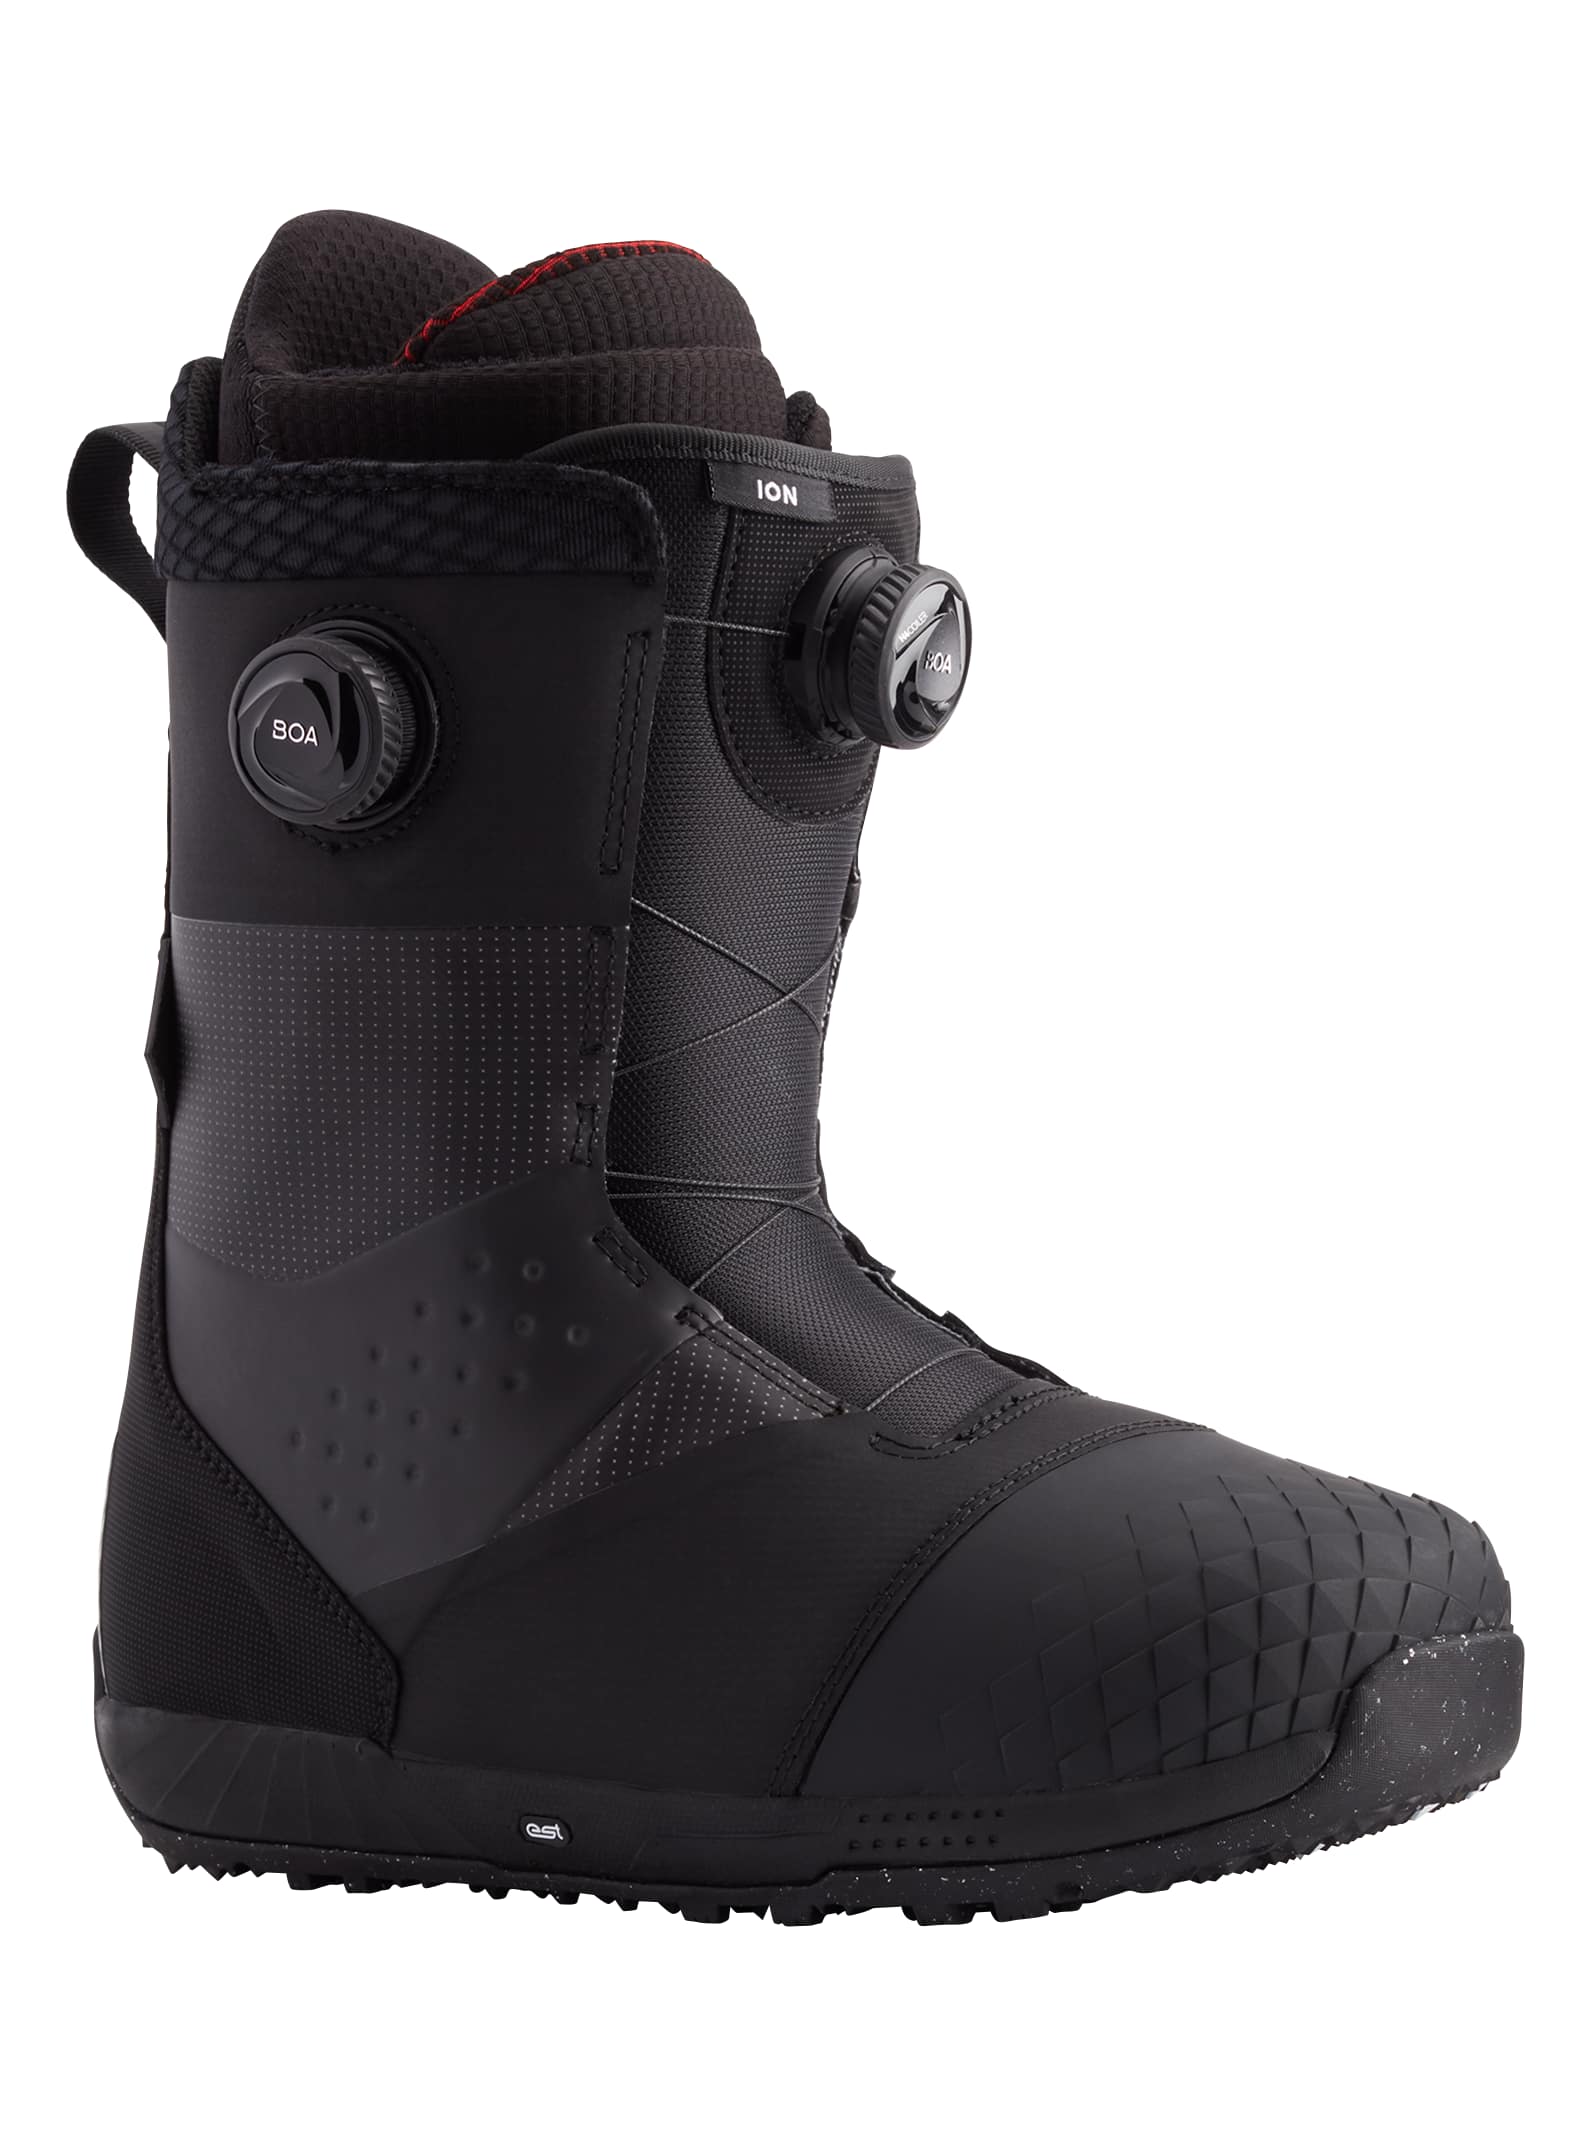 Burton Men's Burton Ion BOA® Snowboard Boots Black